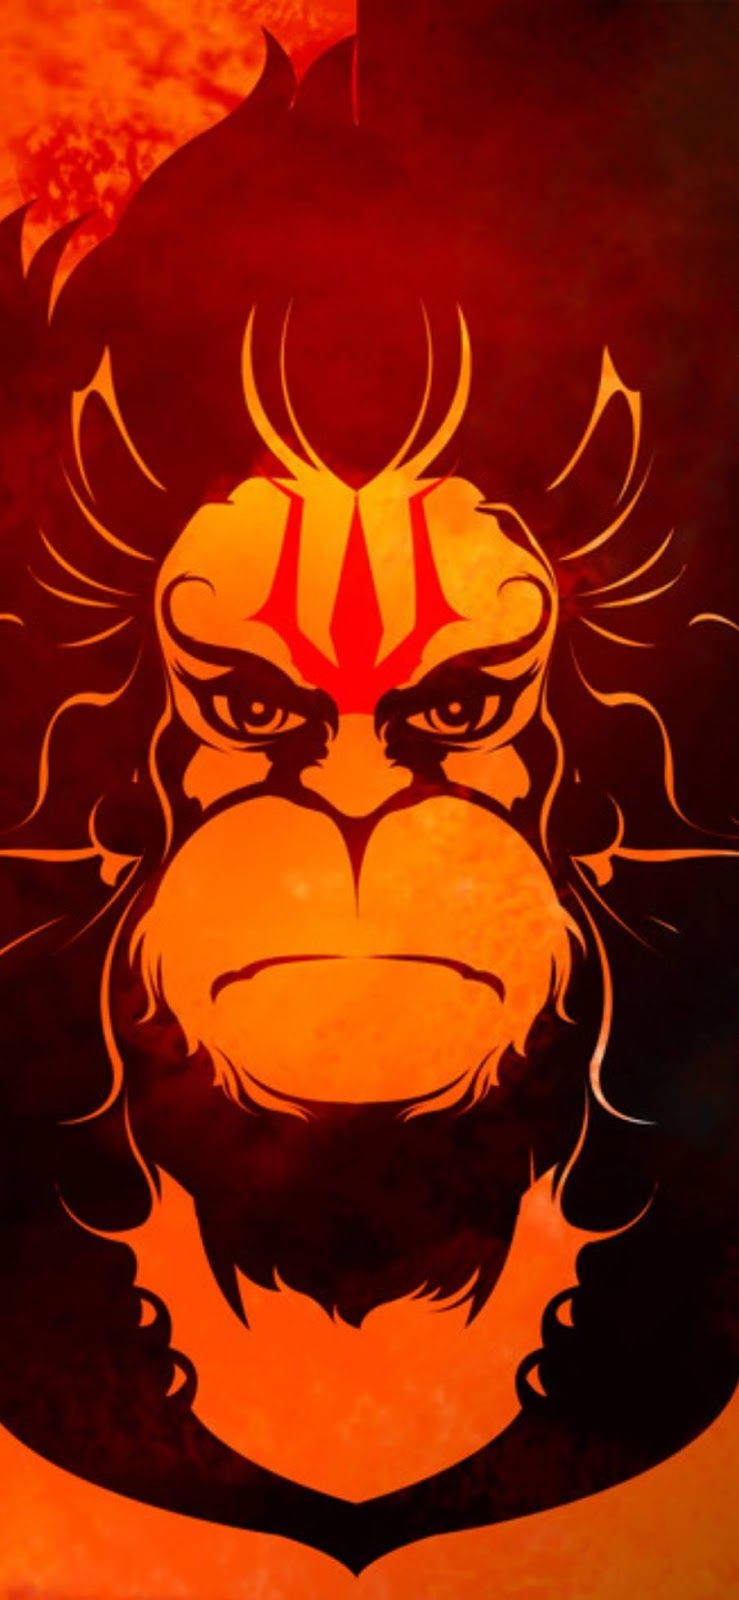 Lord Hanuman full HD Mobile Screen Wallpaper and unknown